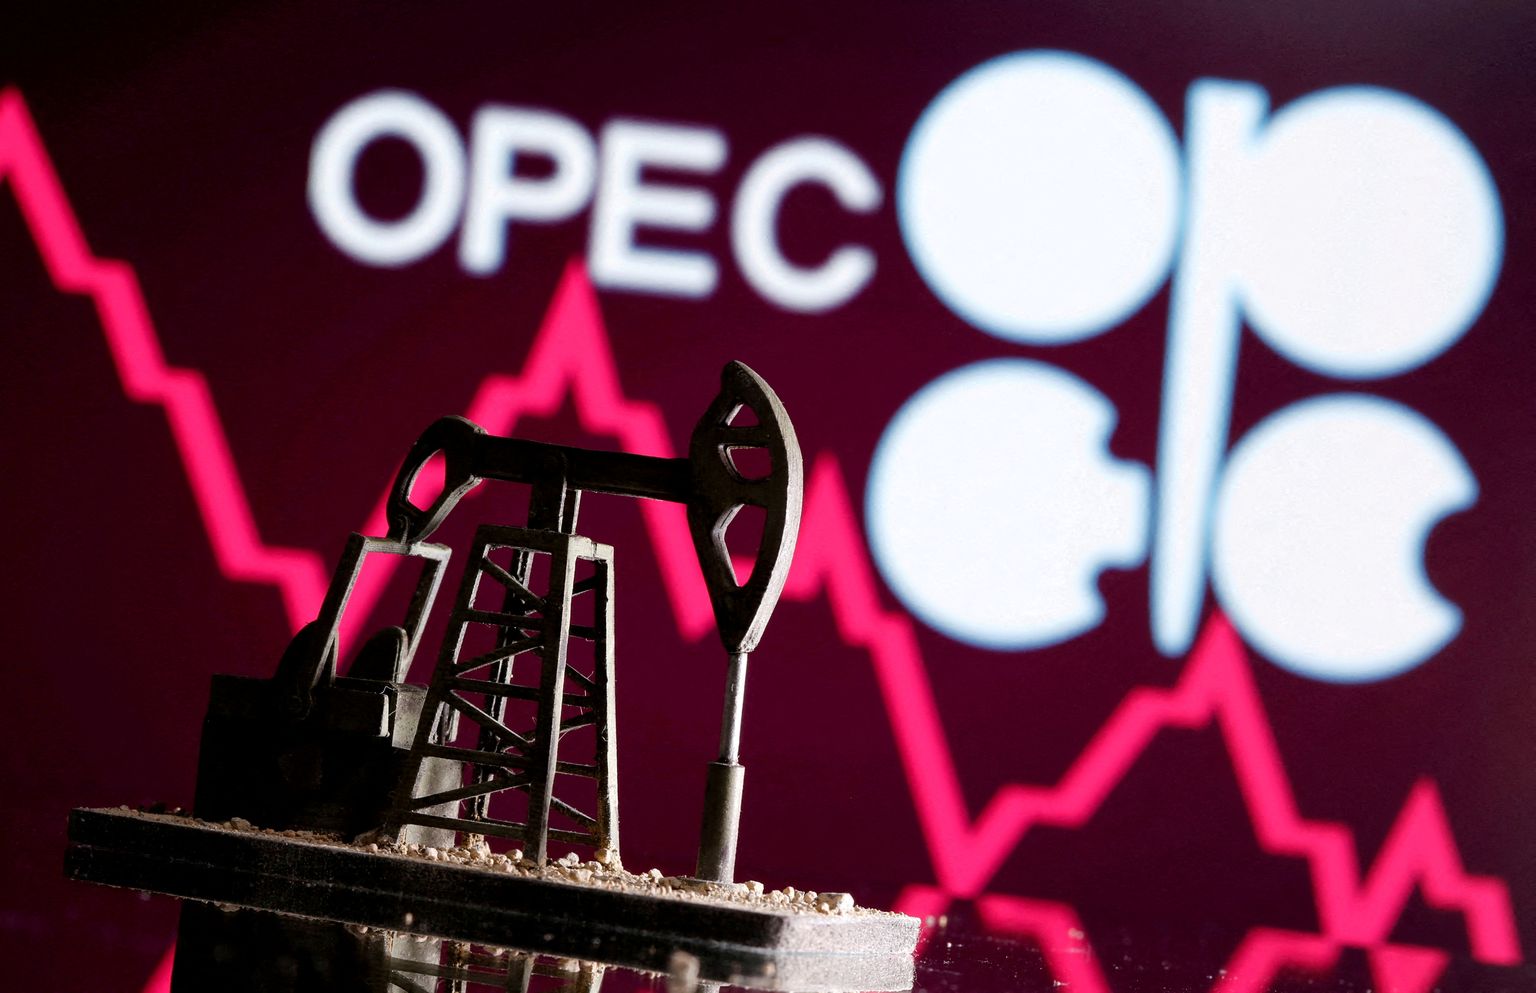 OPECi logo.